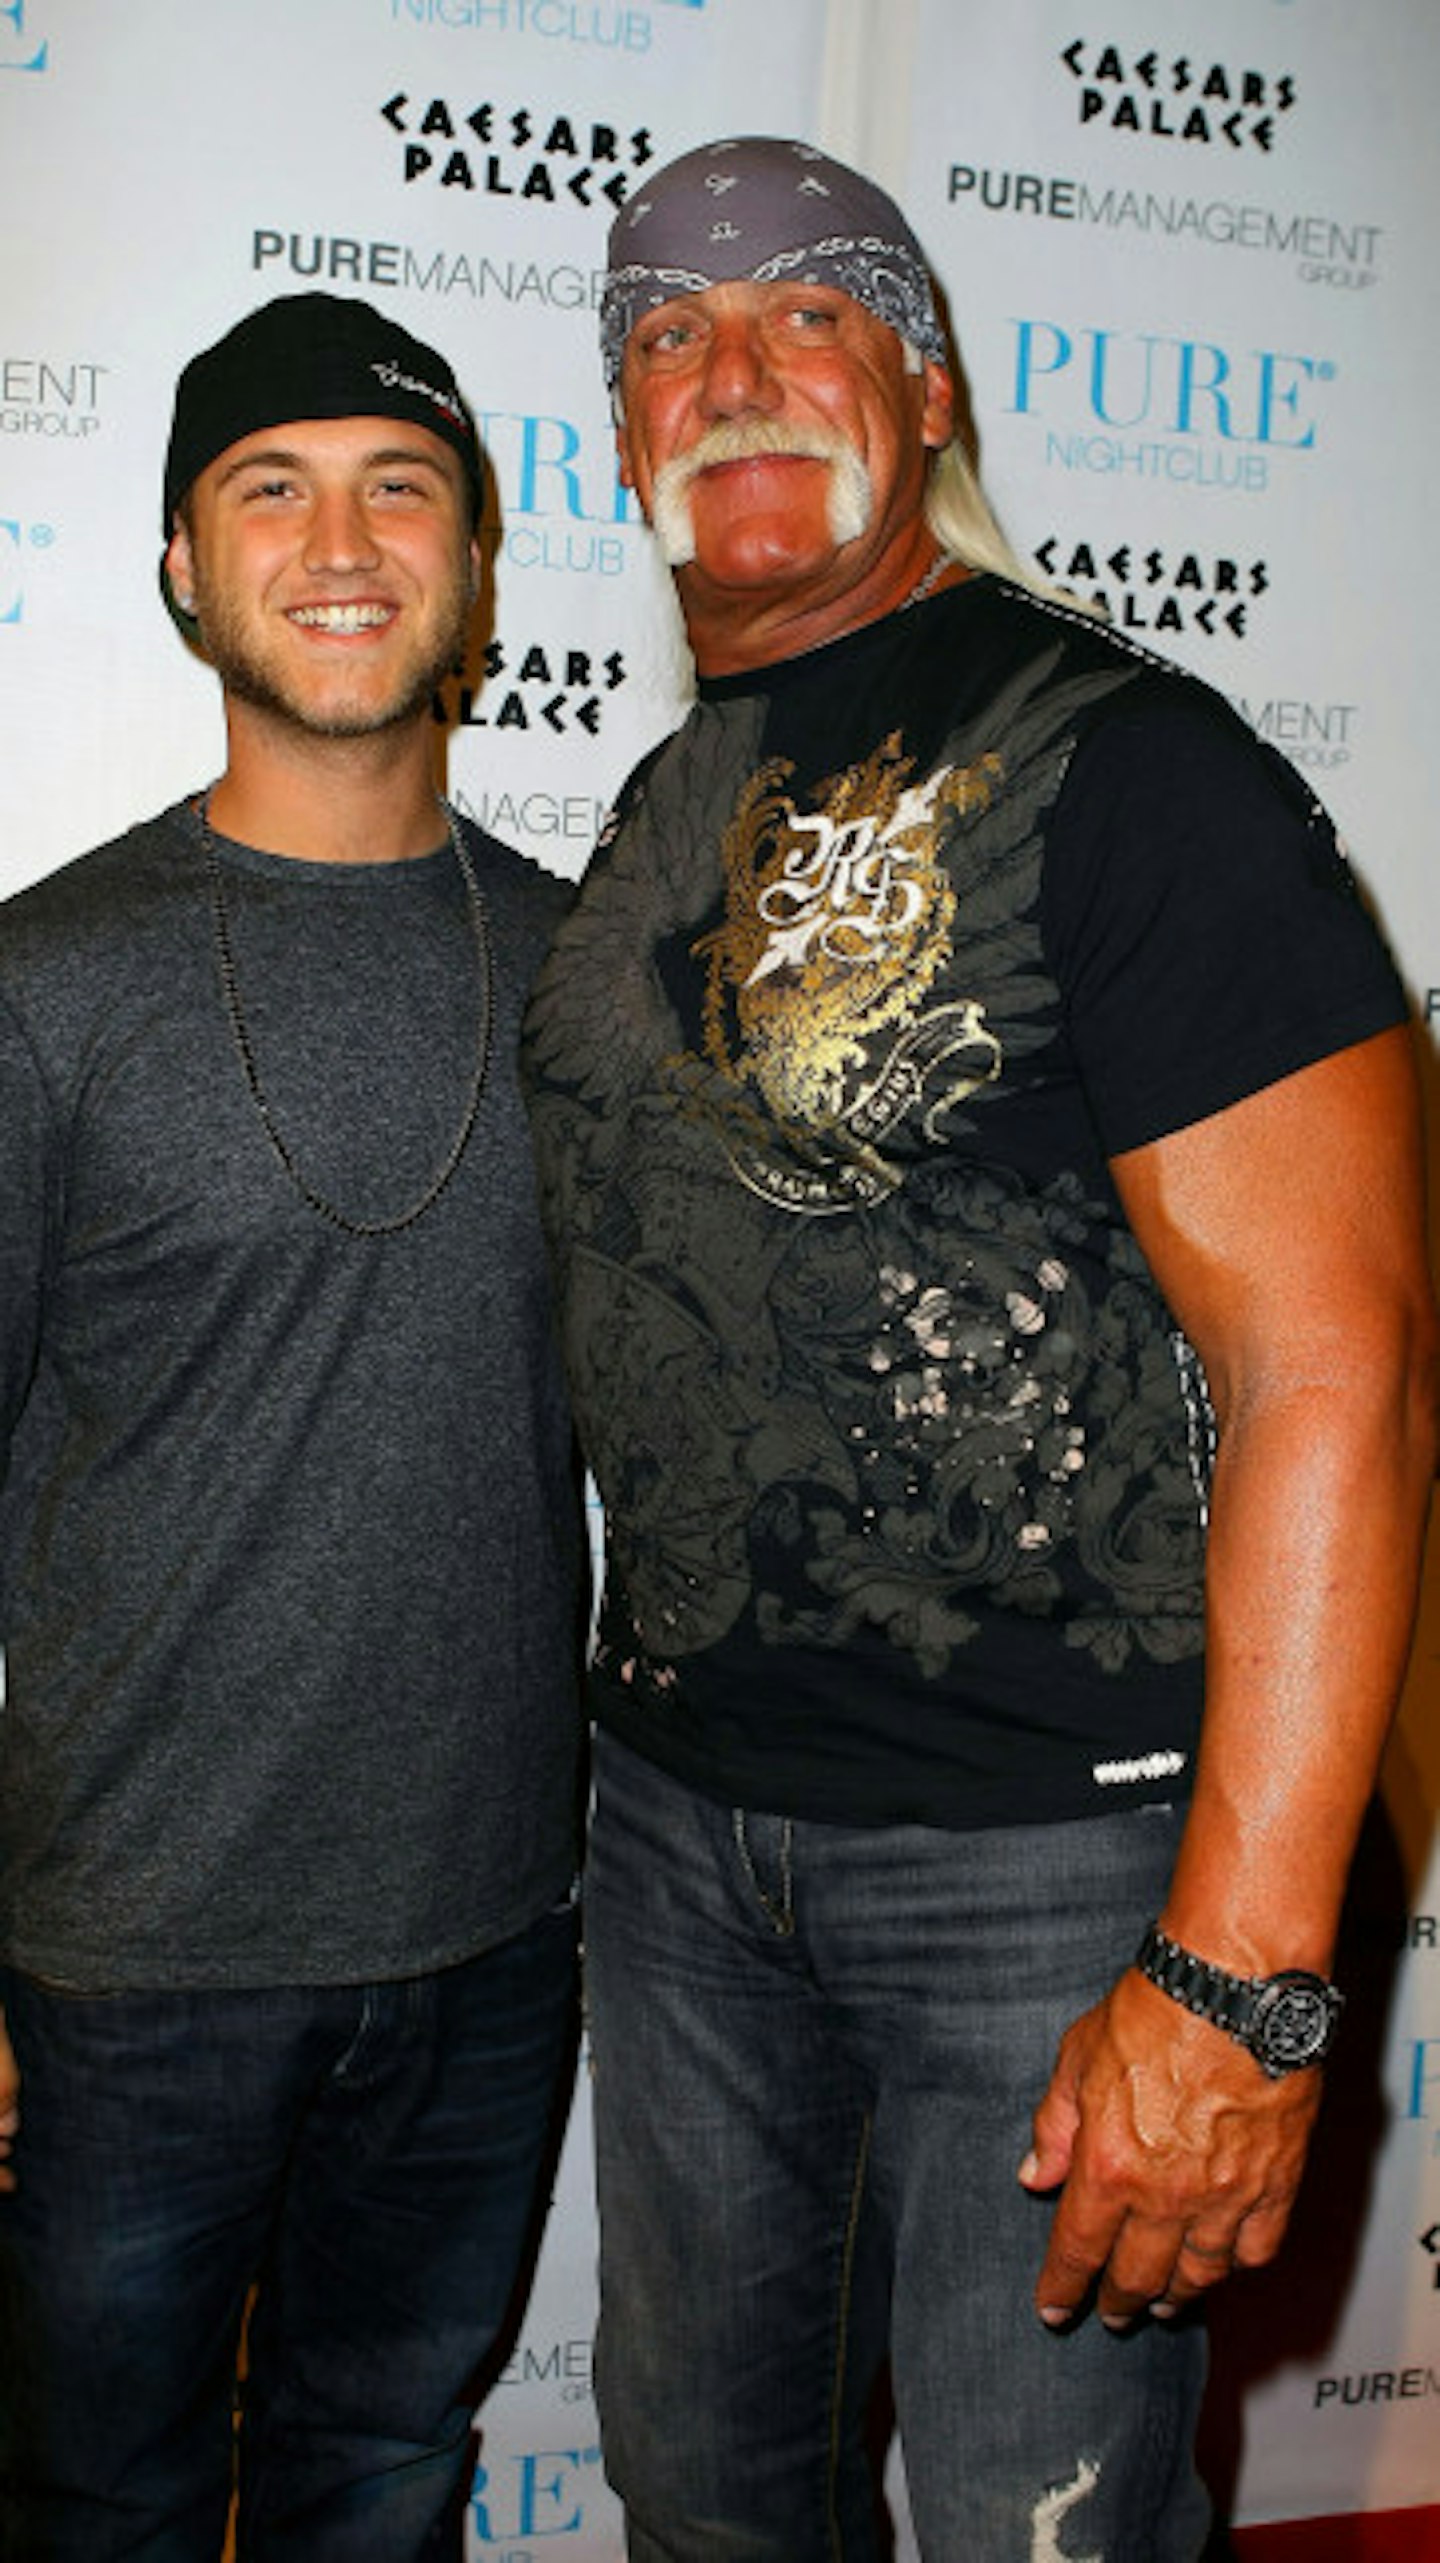 Nick alongside his dad, Hulk Hogan